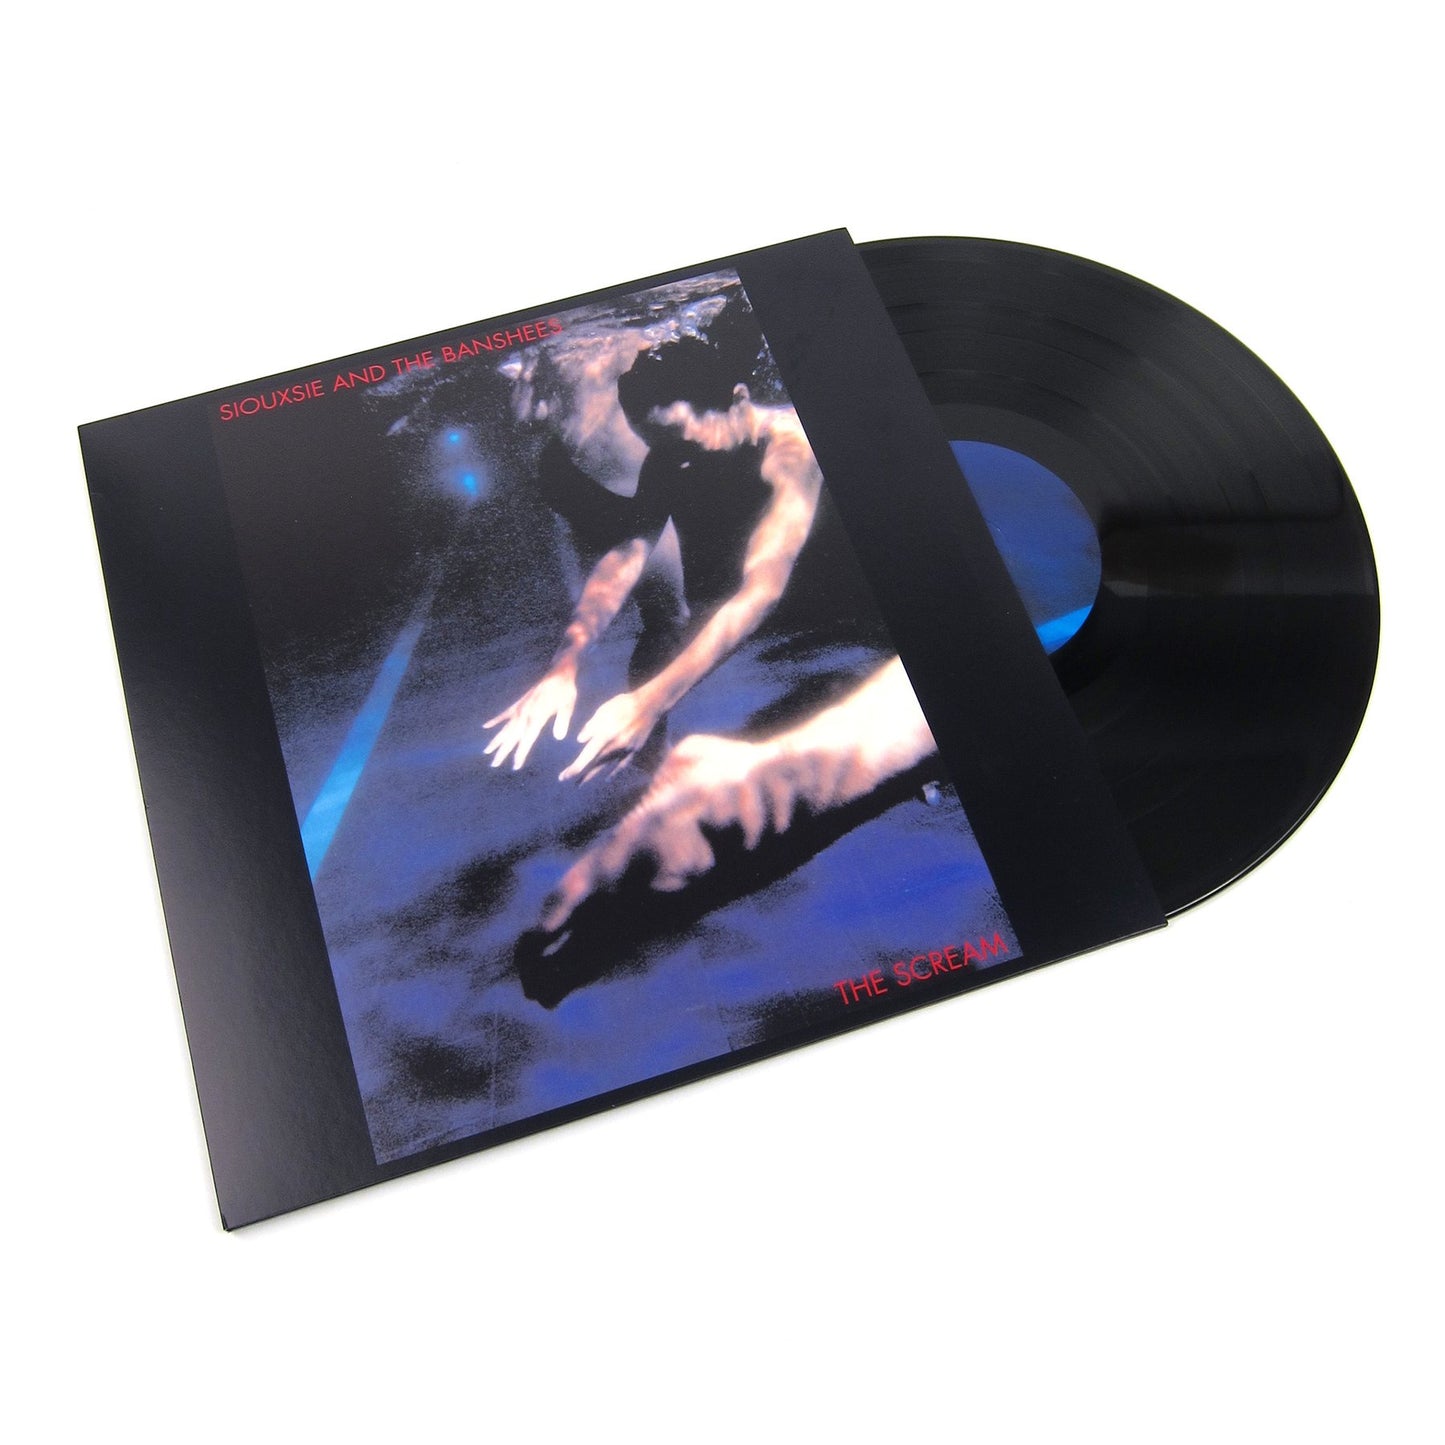 NEW (Euro) - Siouxsie & the Banshees, The Scream LP